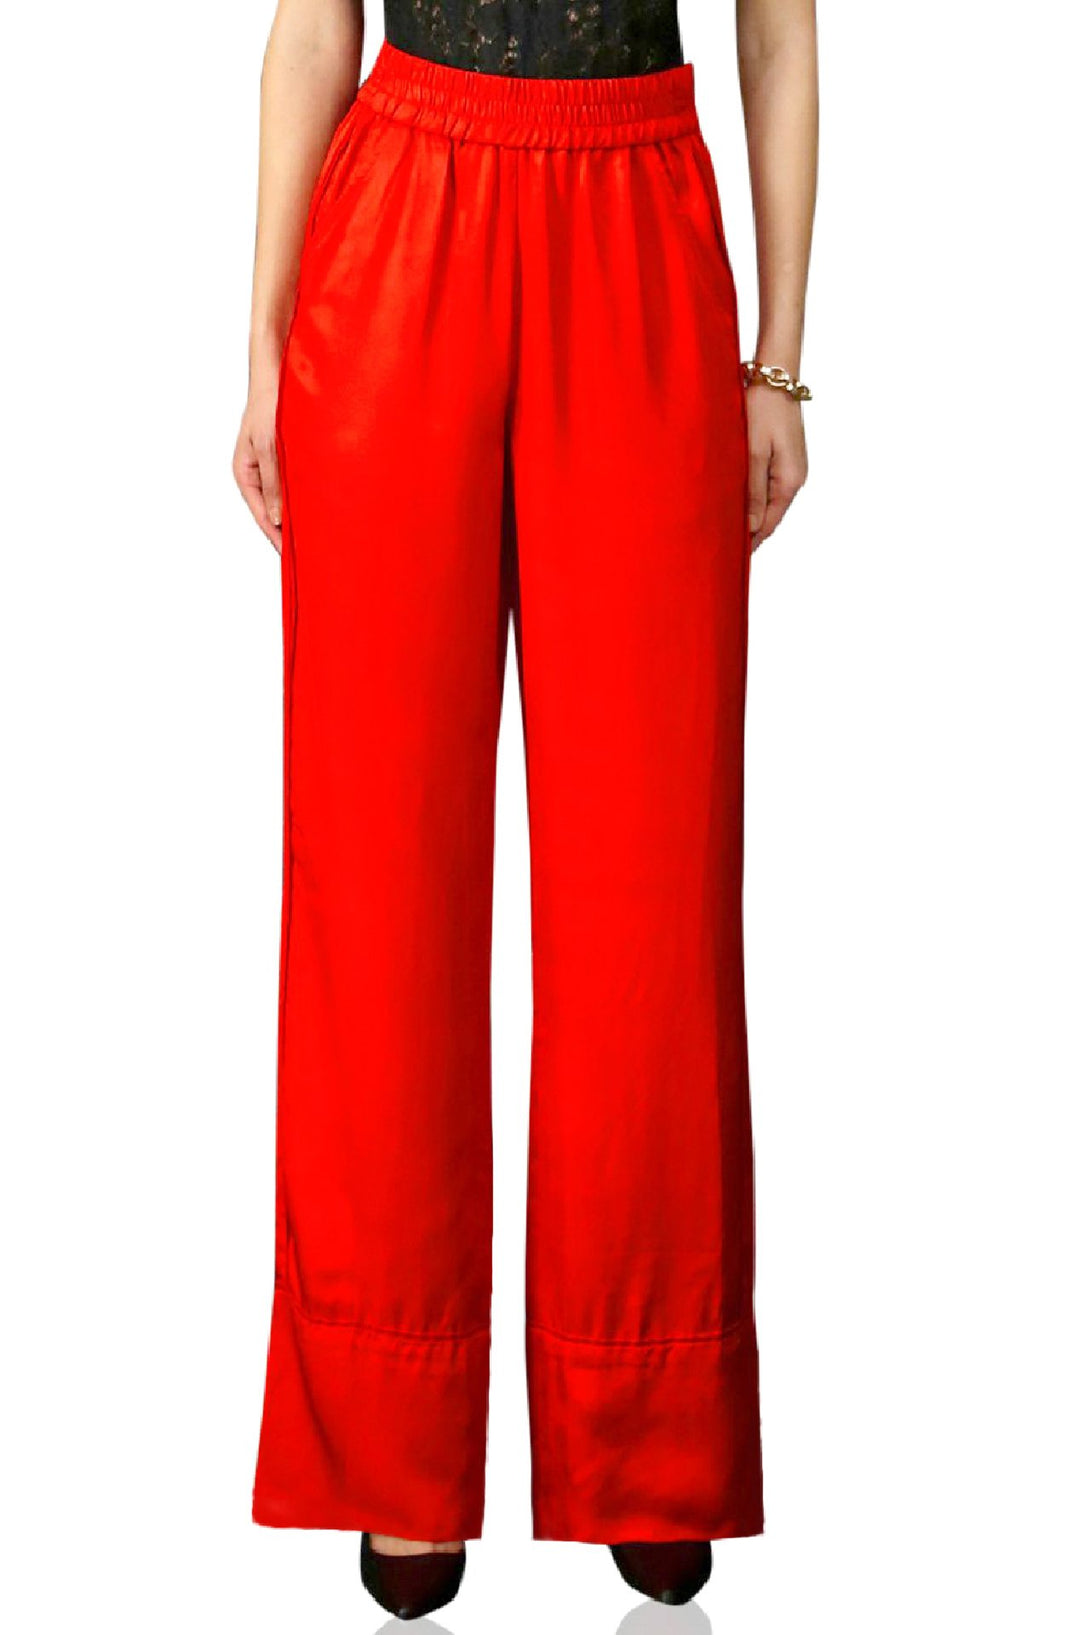 Long-Designer-Red-Pants-For-Women-By-Kyle-Richard